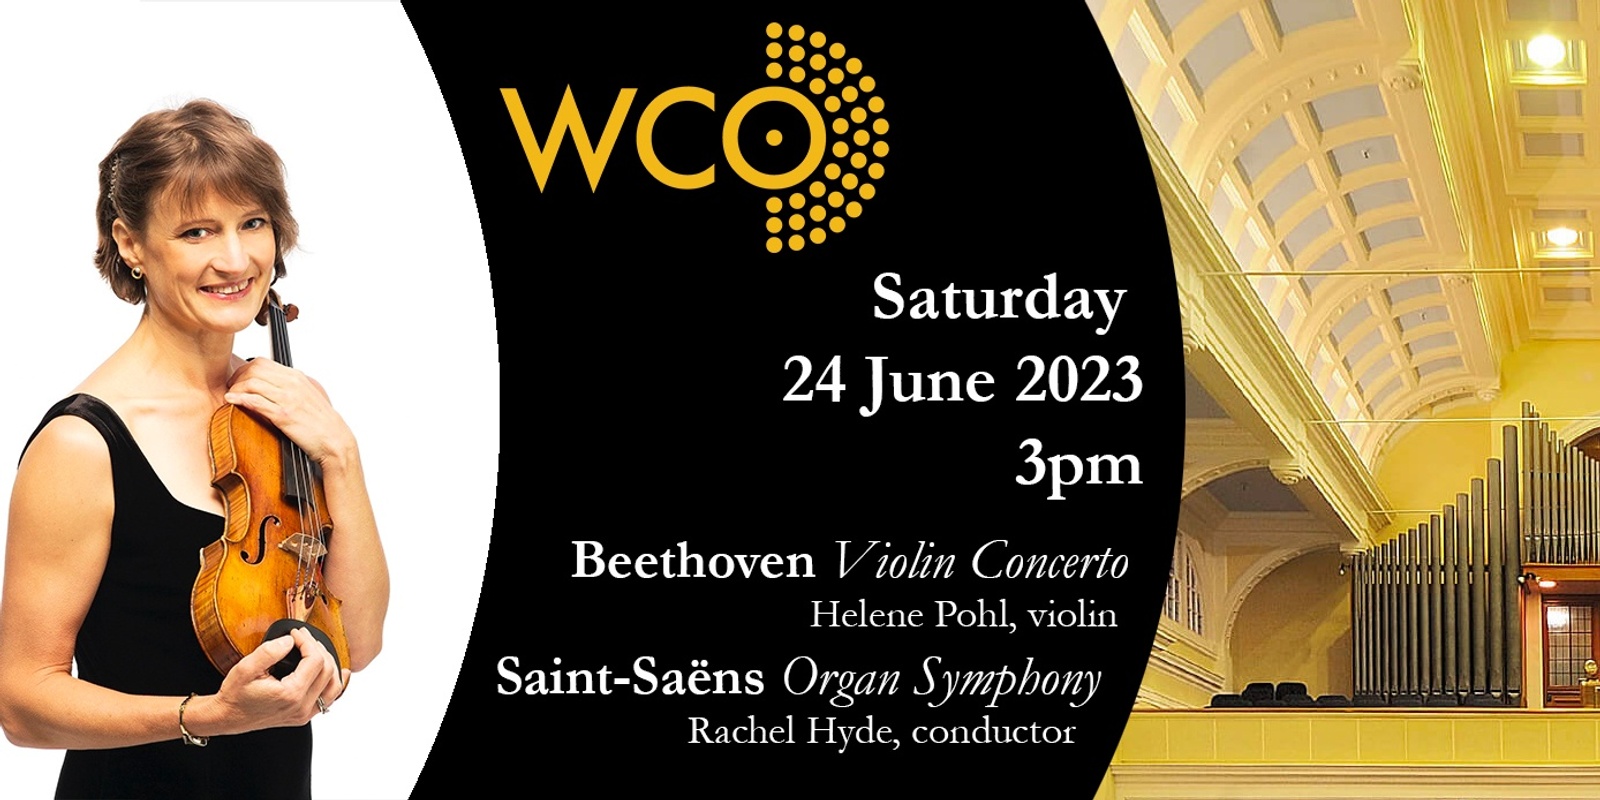 Banner image for Wellington City Orchestra concert on 24 June 2023